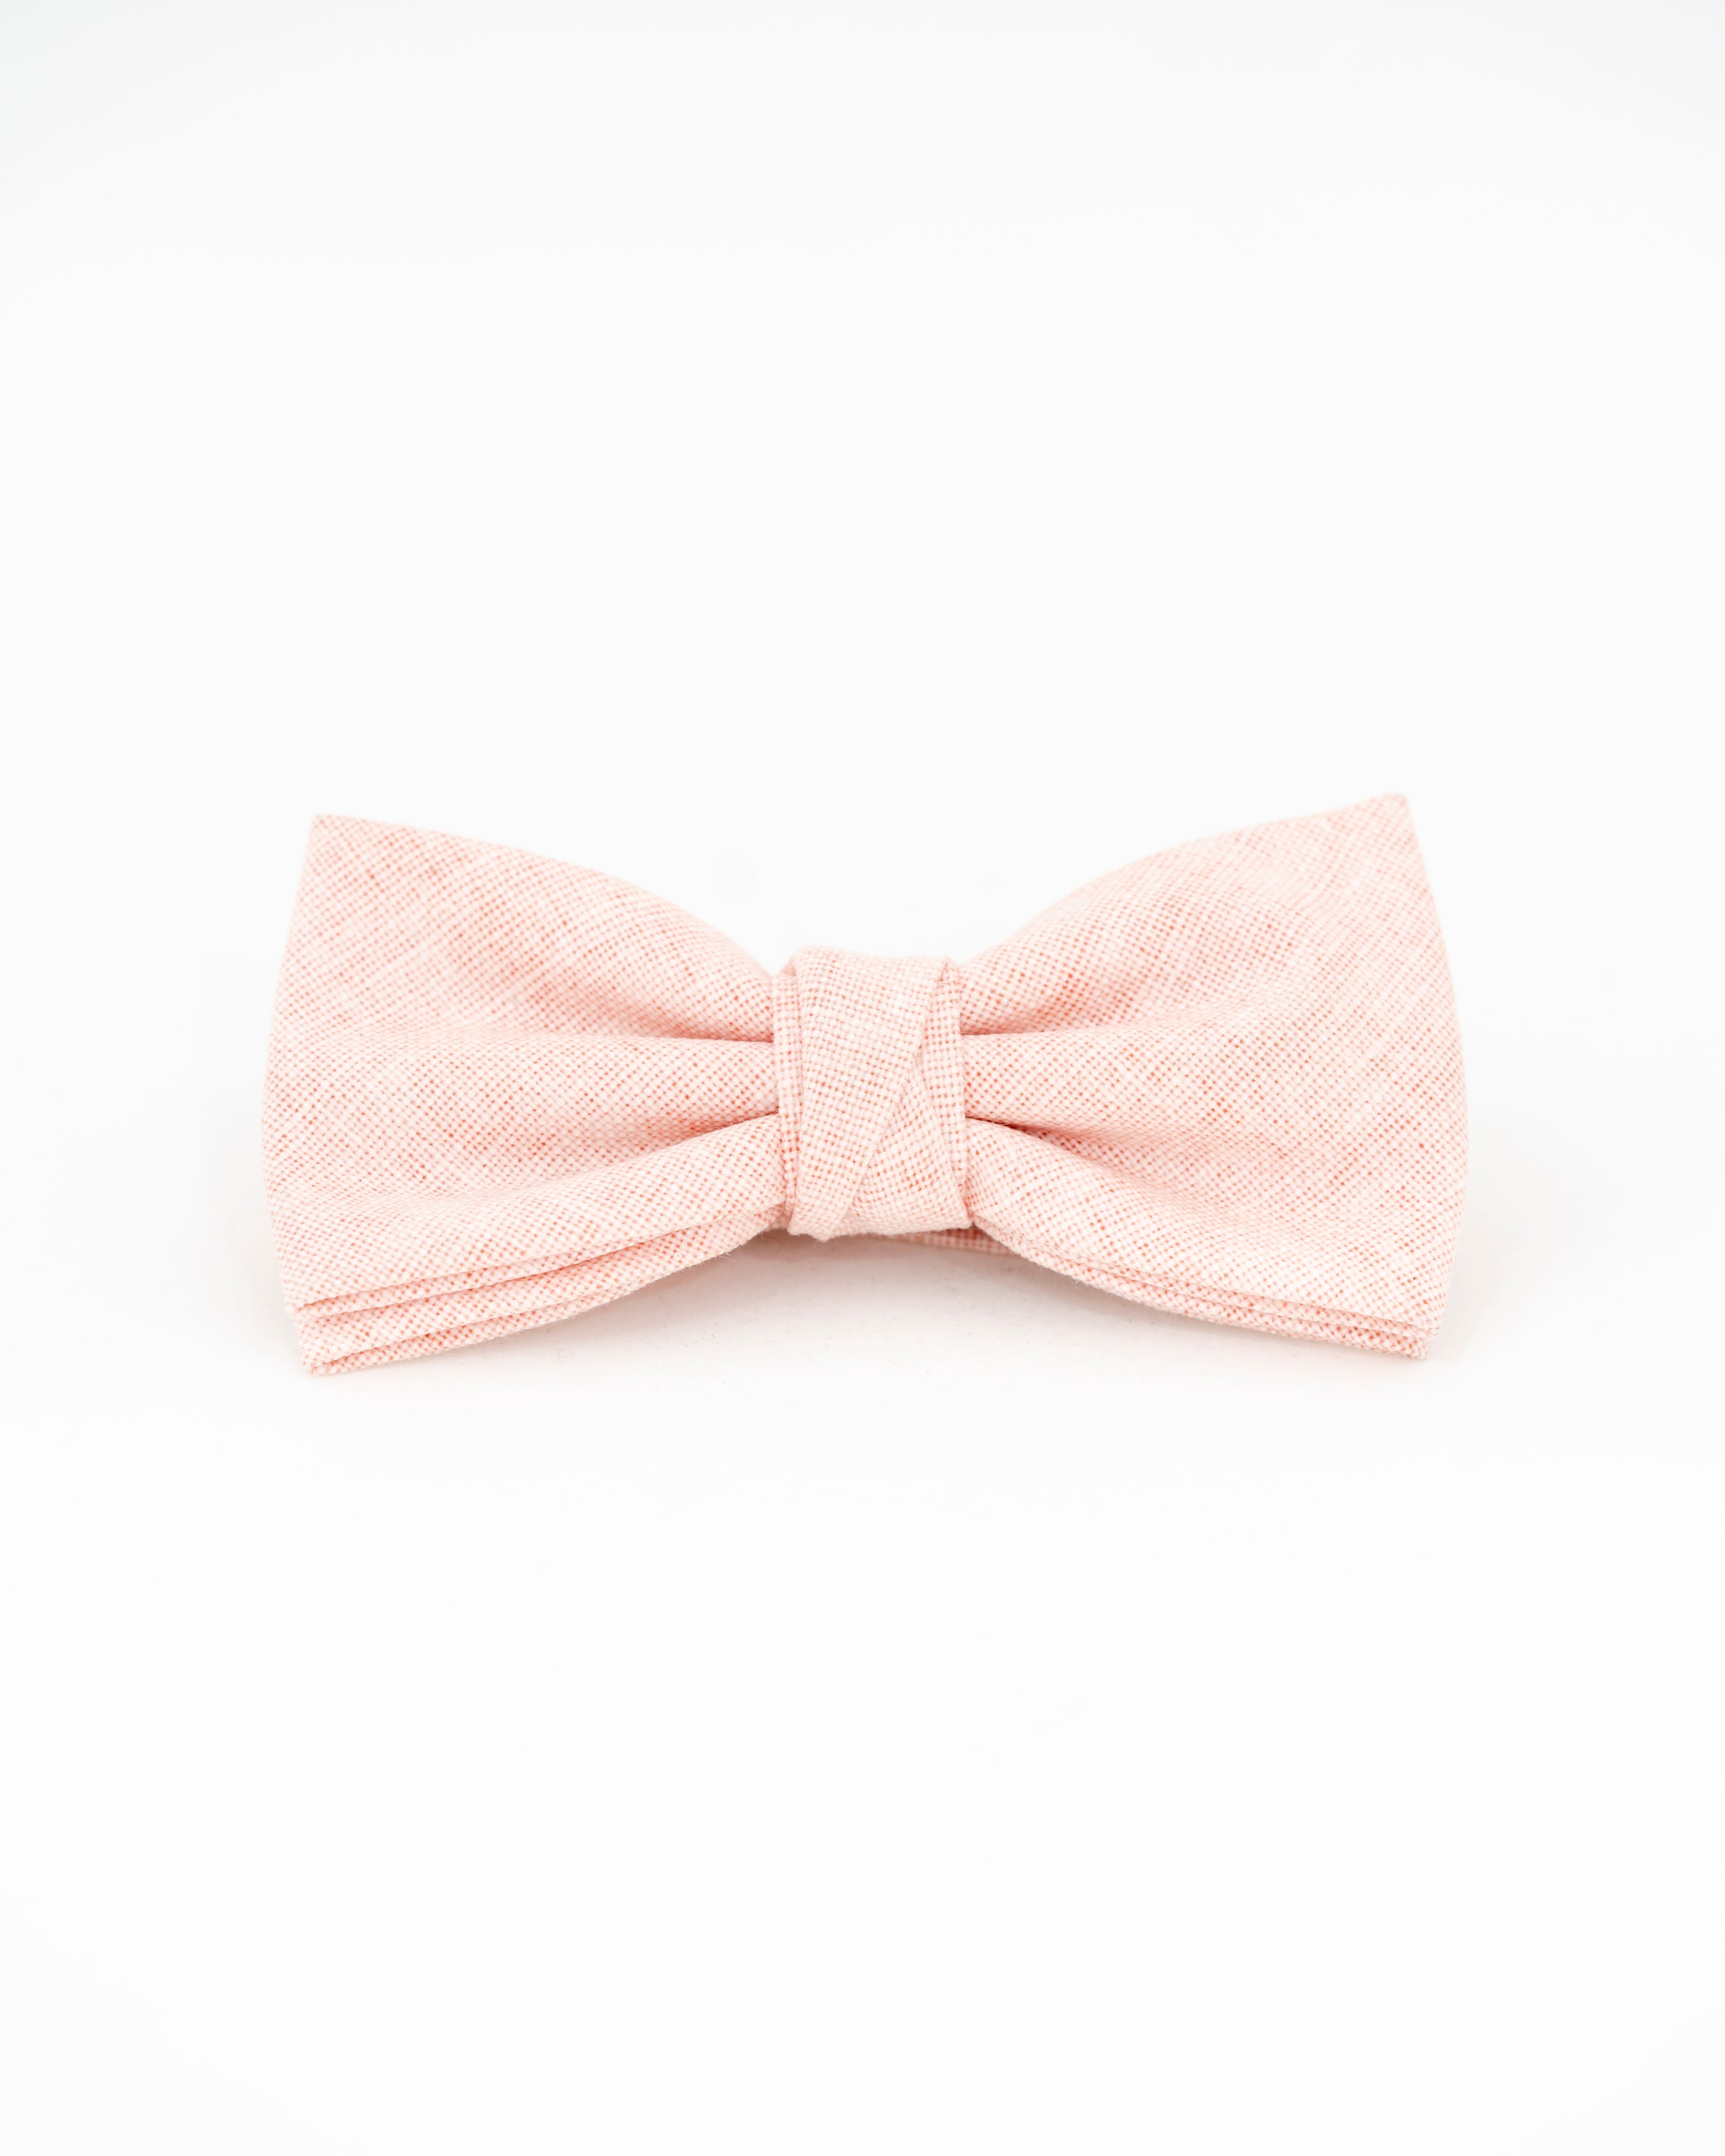 MEYER Bow Tie - Cotton/Linen